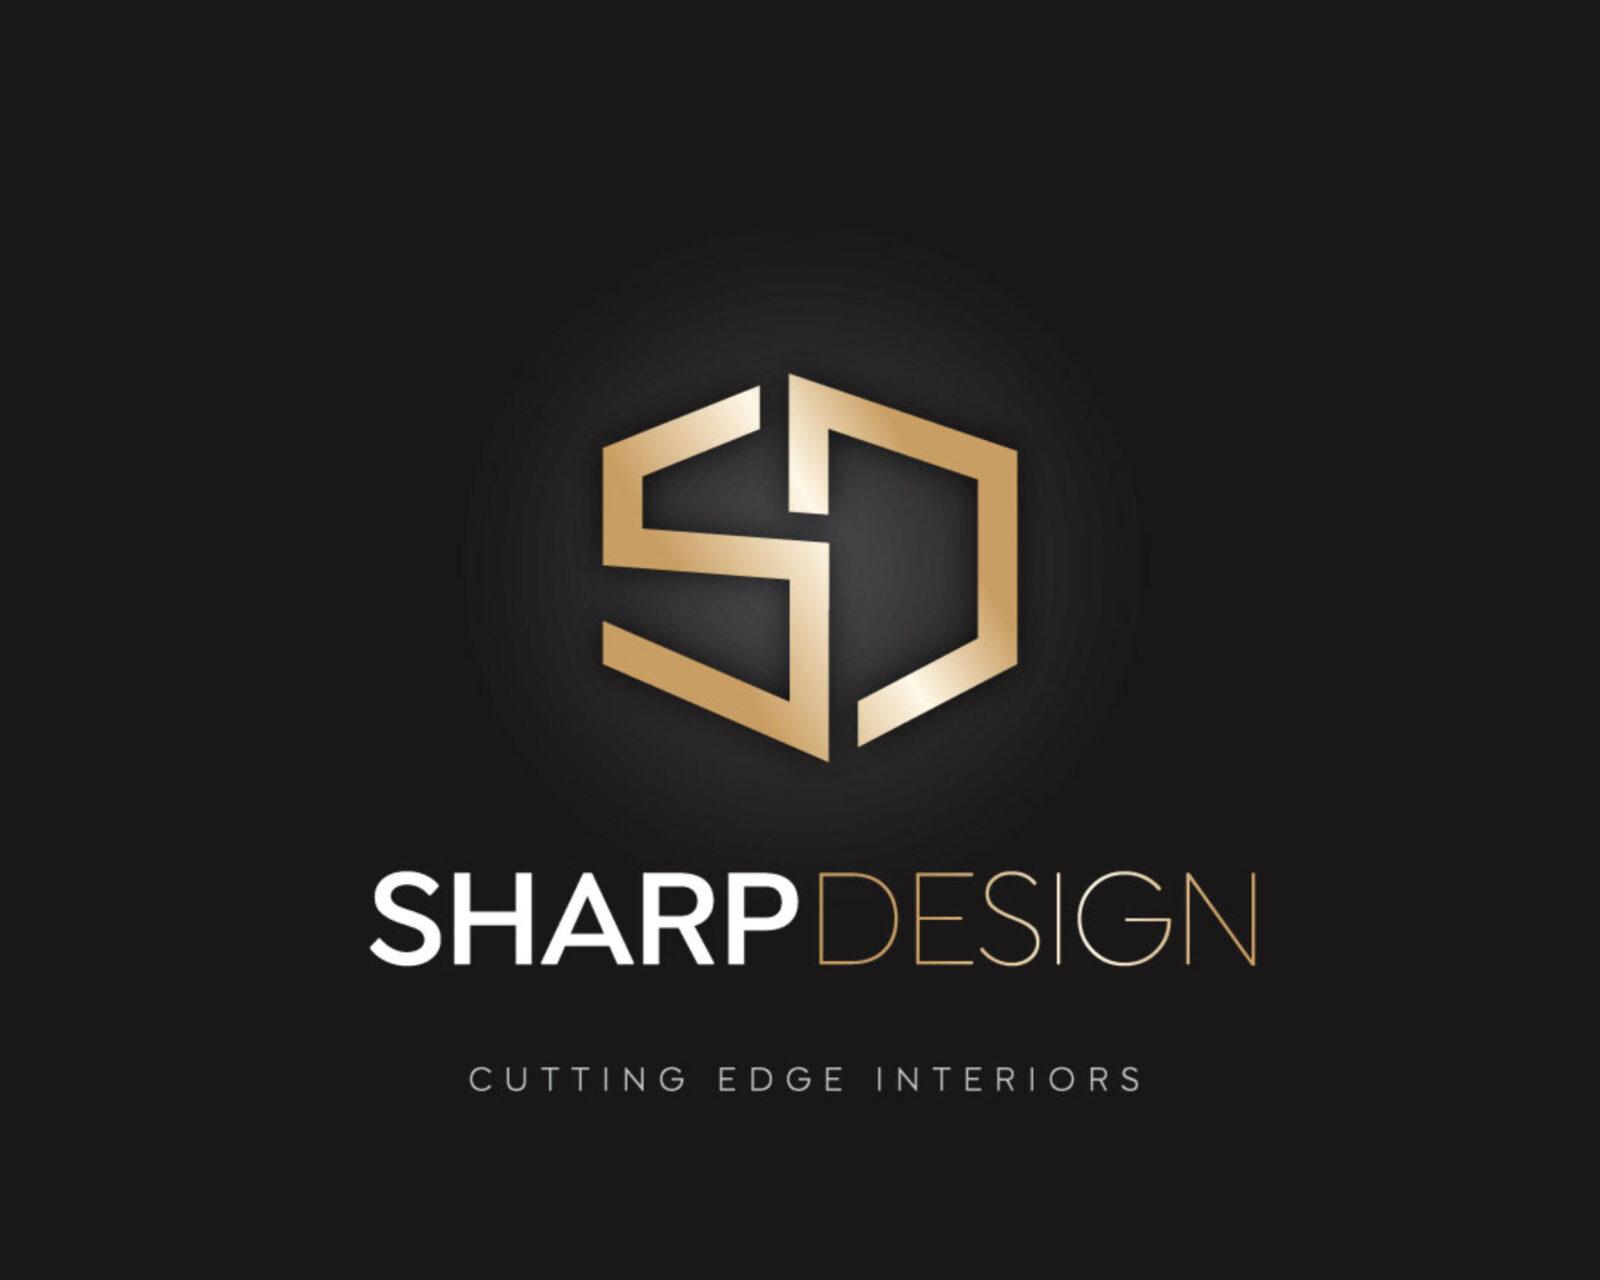 rhemagroup portfolio SHARP DESIGN logo 2500x2000 1 - 3